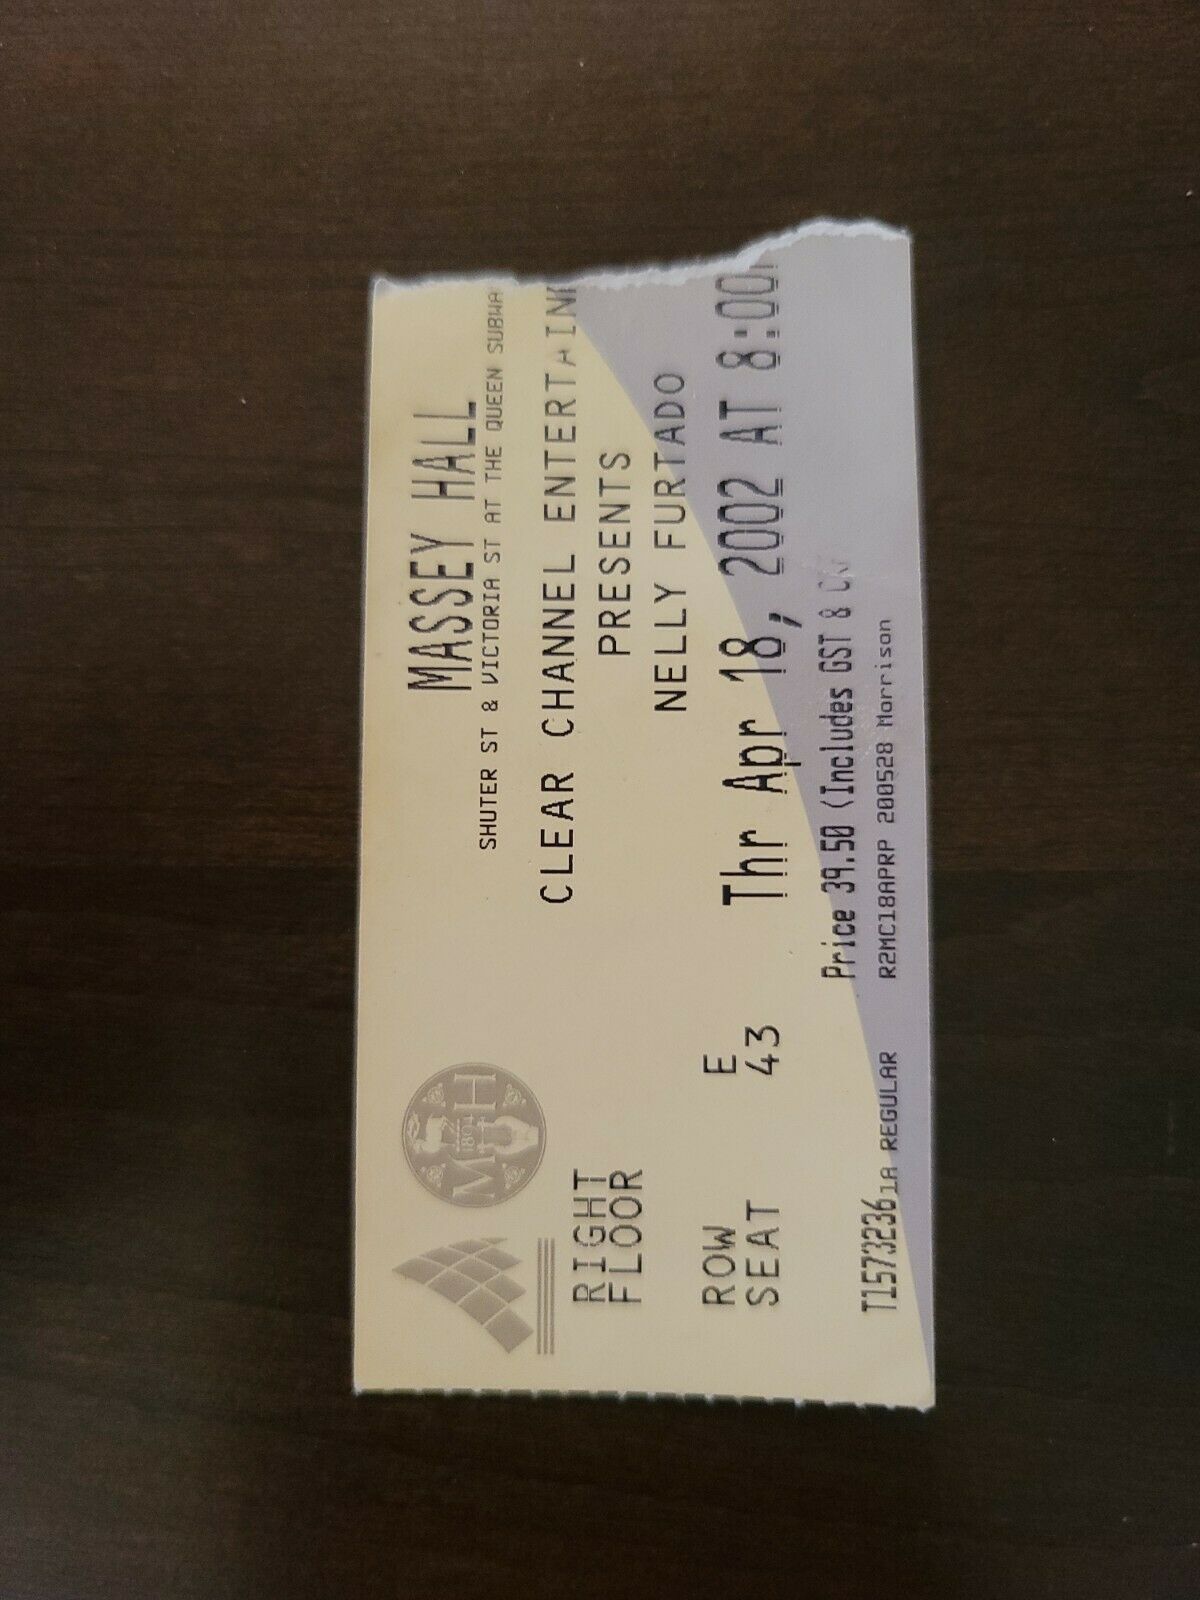 Nelly Furtado 2002, Toronto Massey Hall Original Concert Ticket Stub